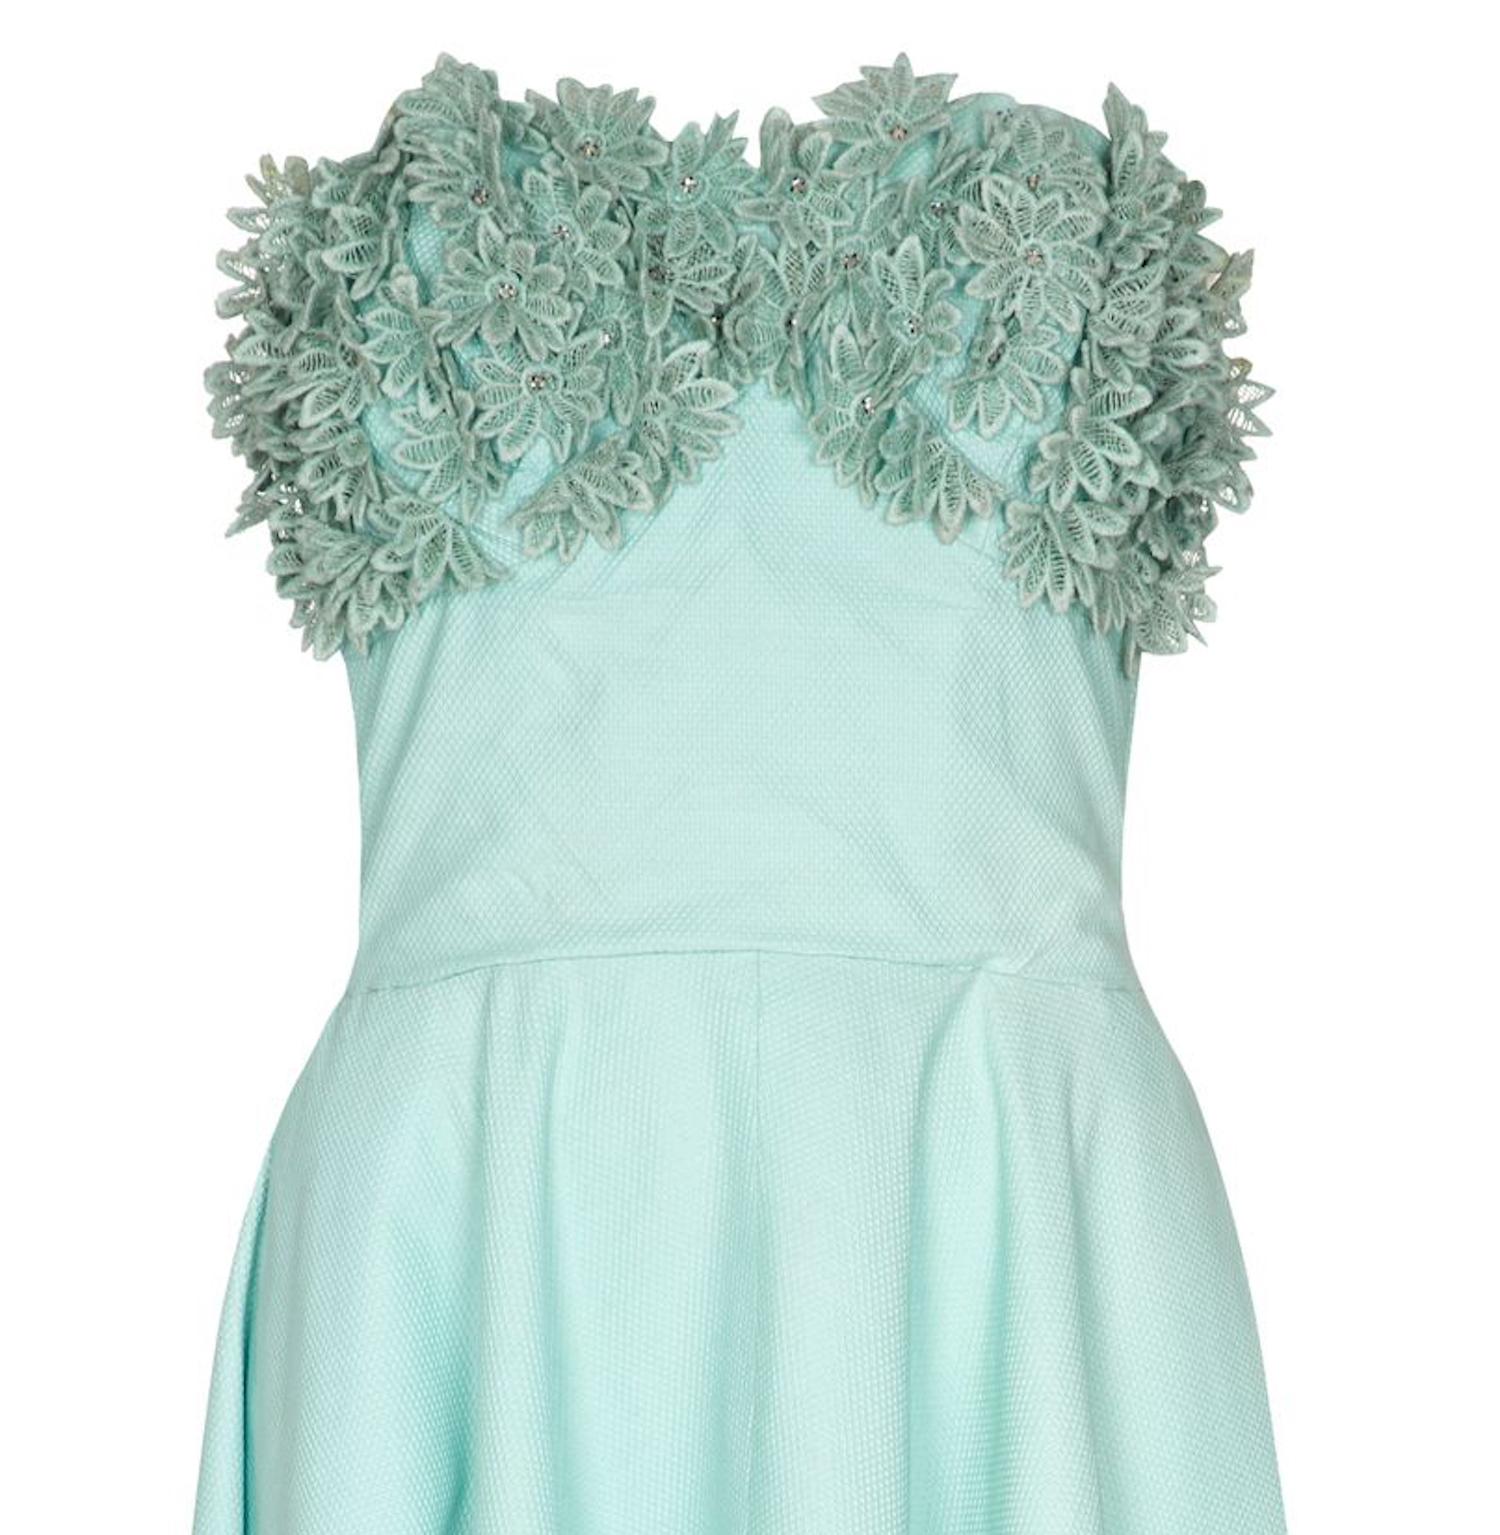 aquamarine strapless dress